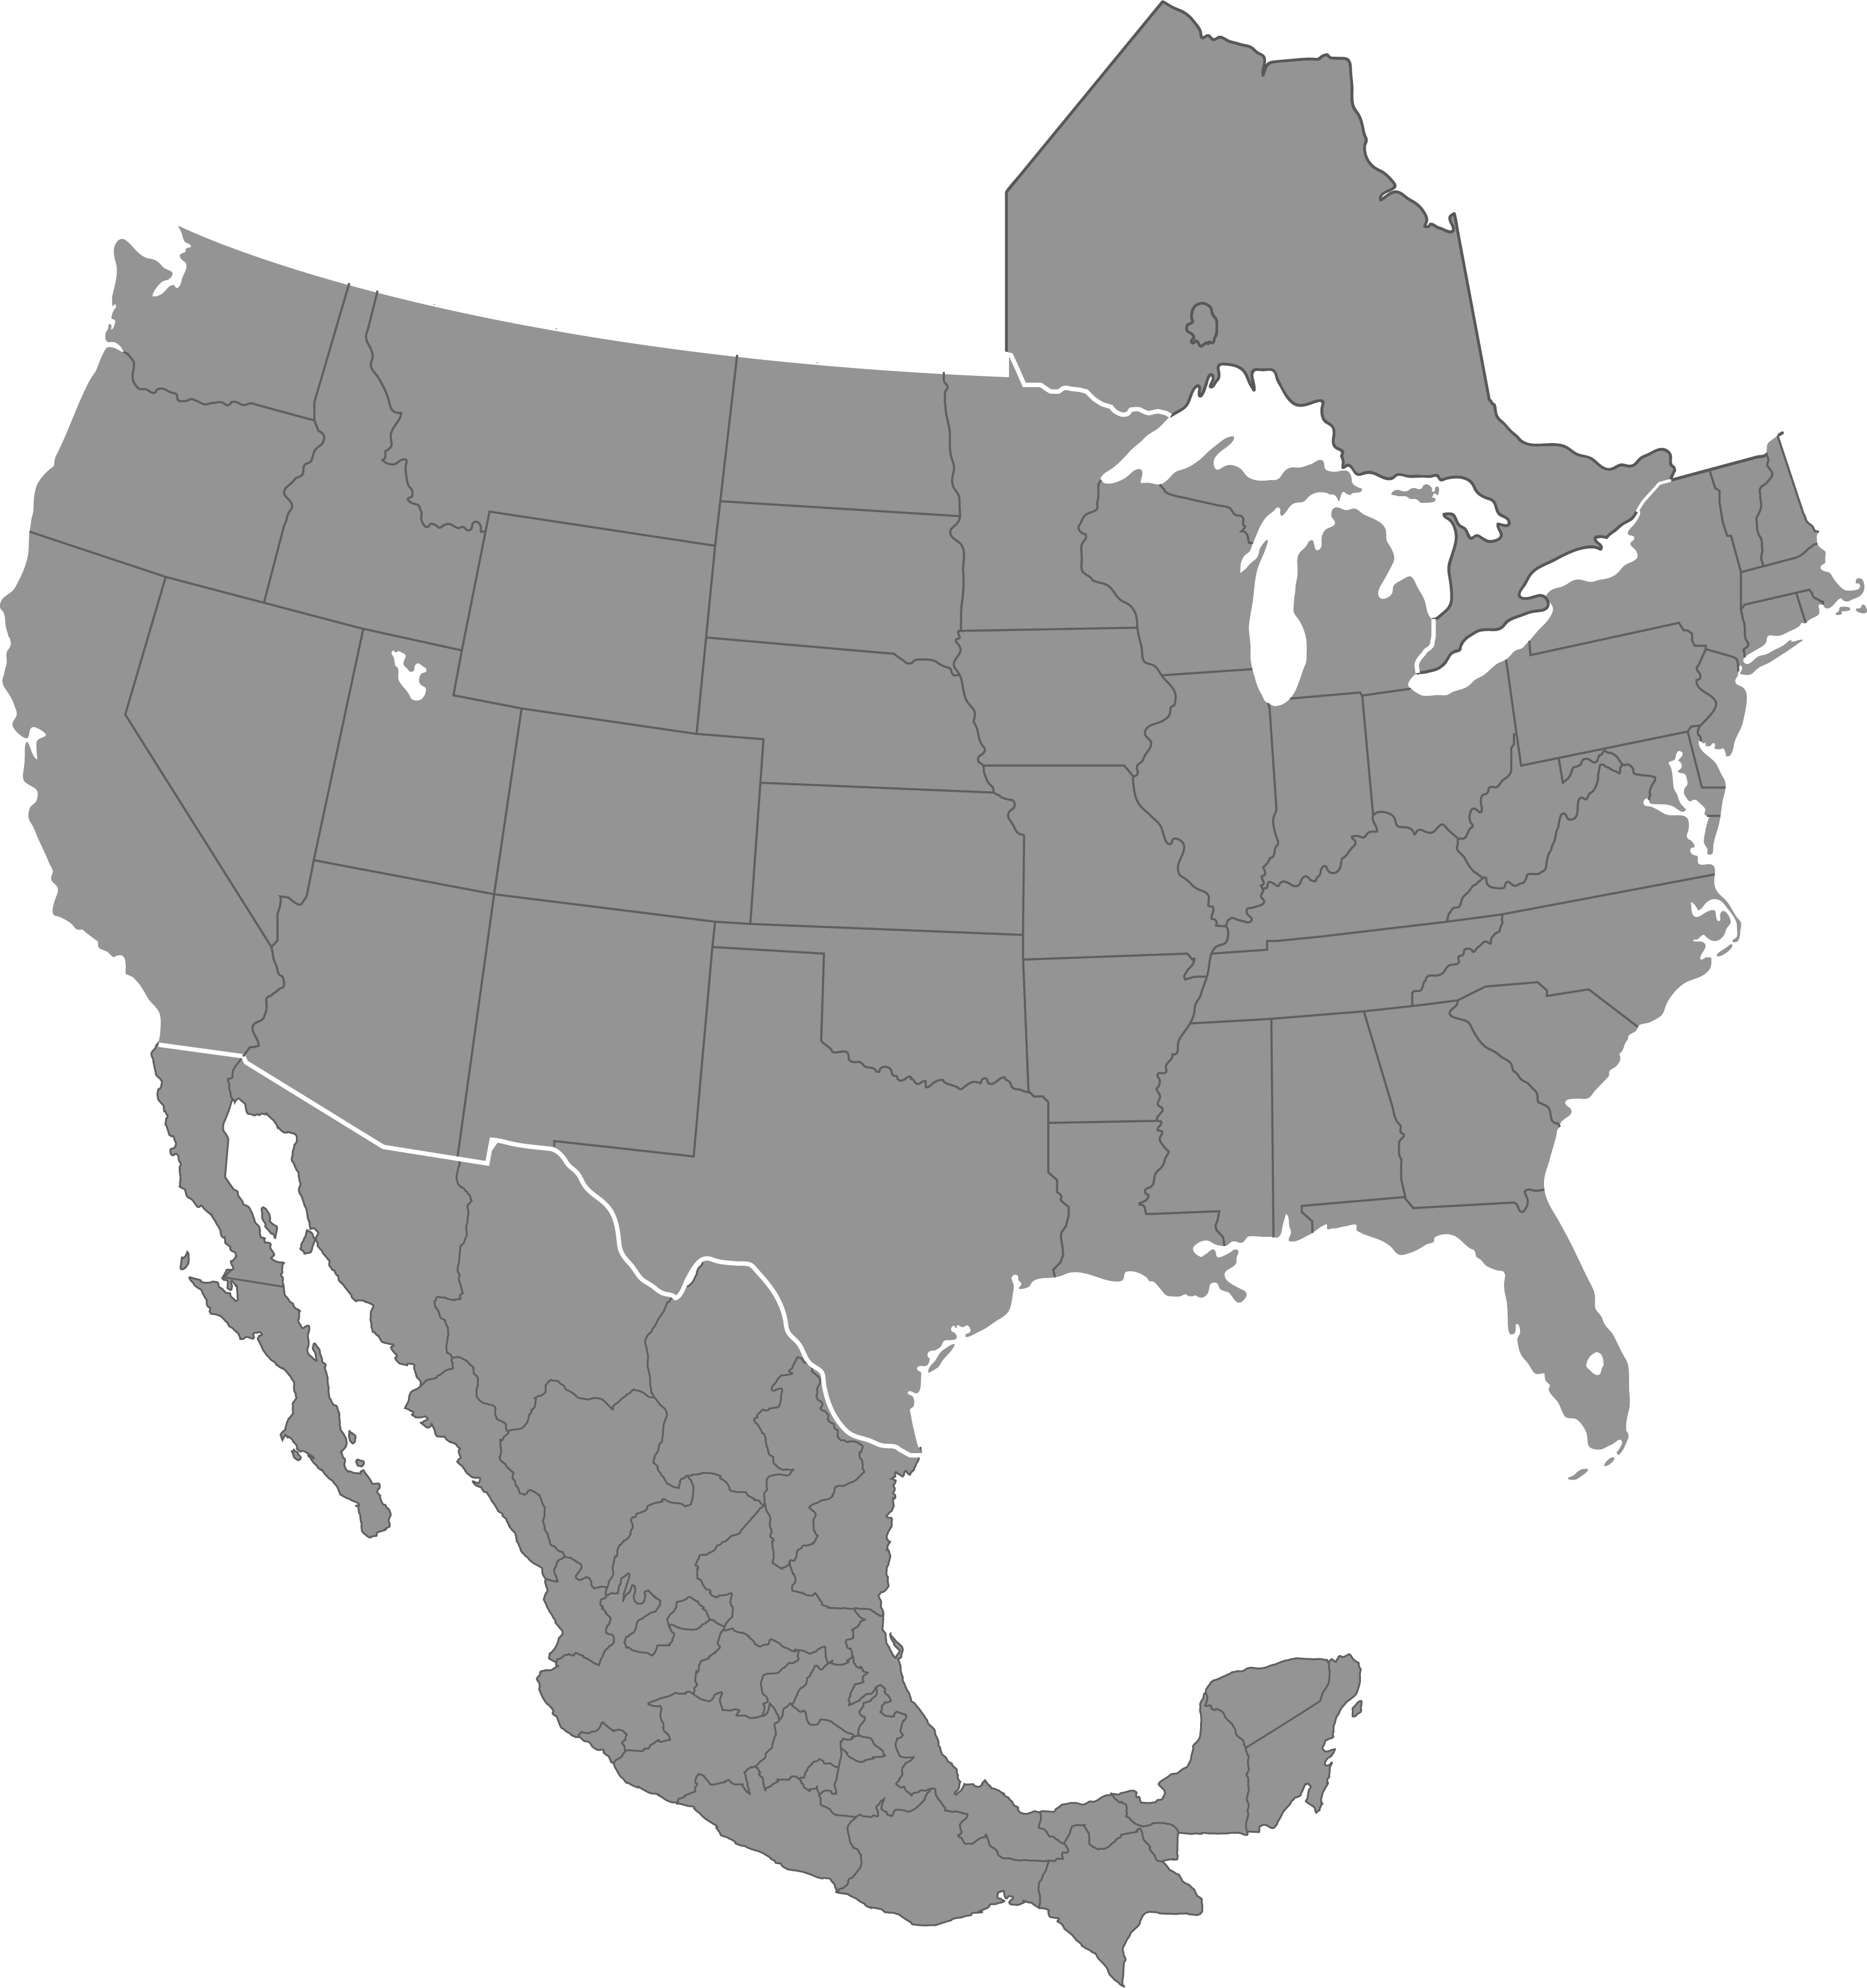 Simple graphic of North America